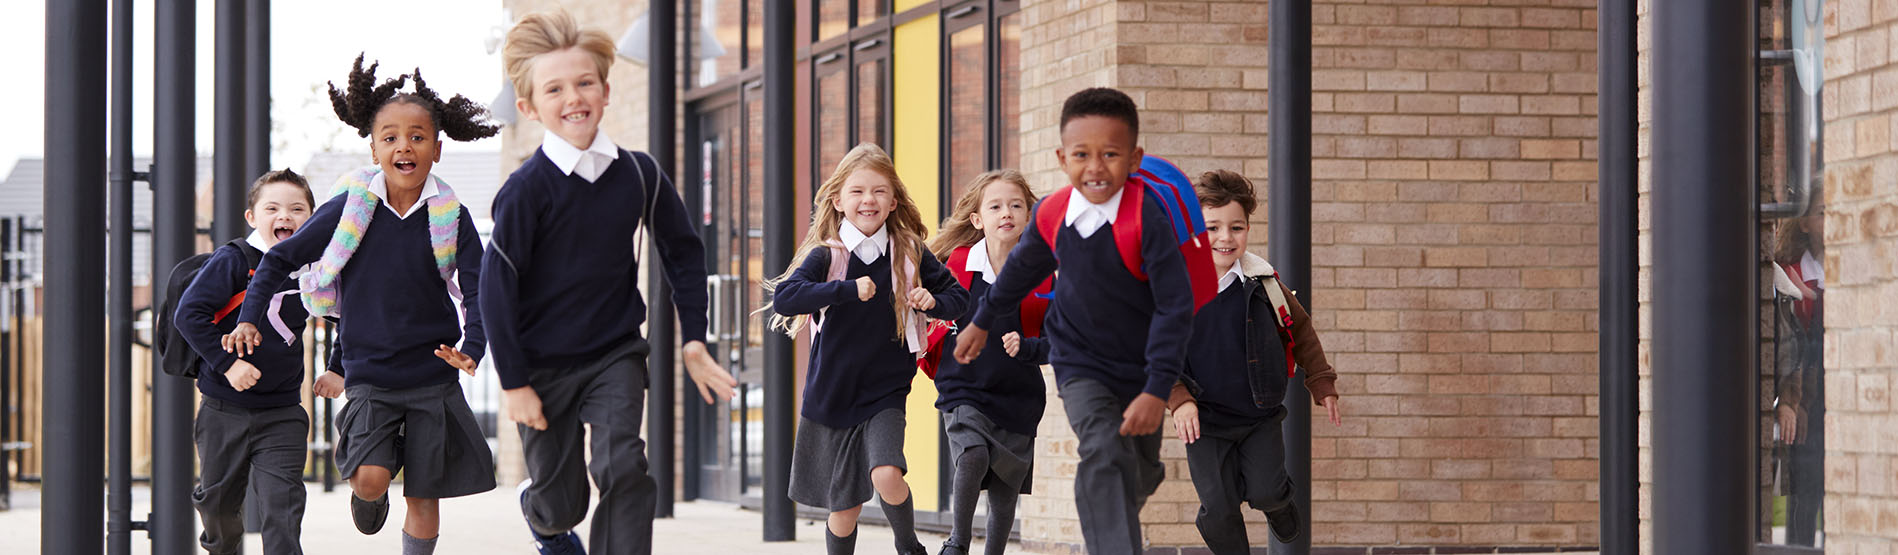 Primary school children running outside school